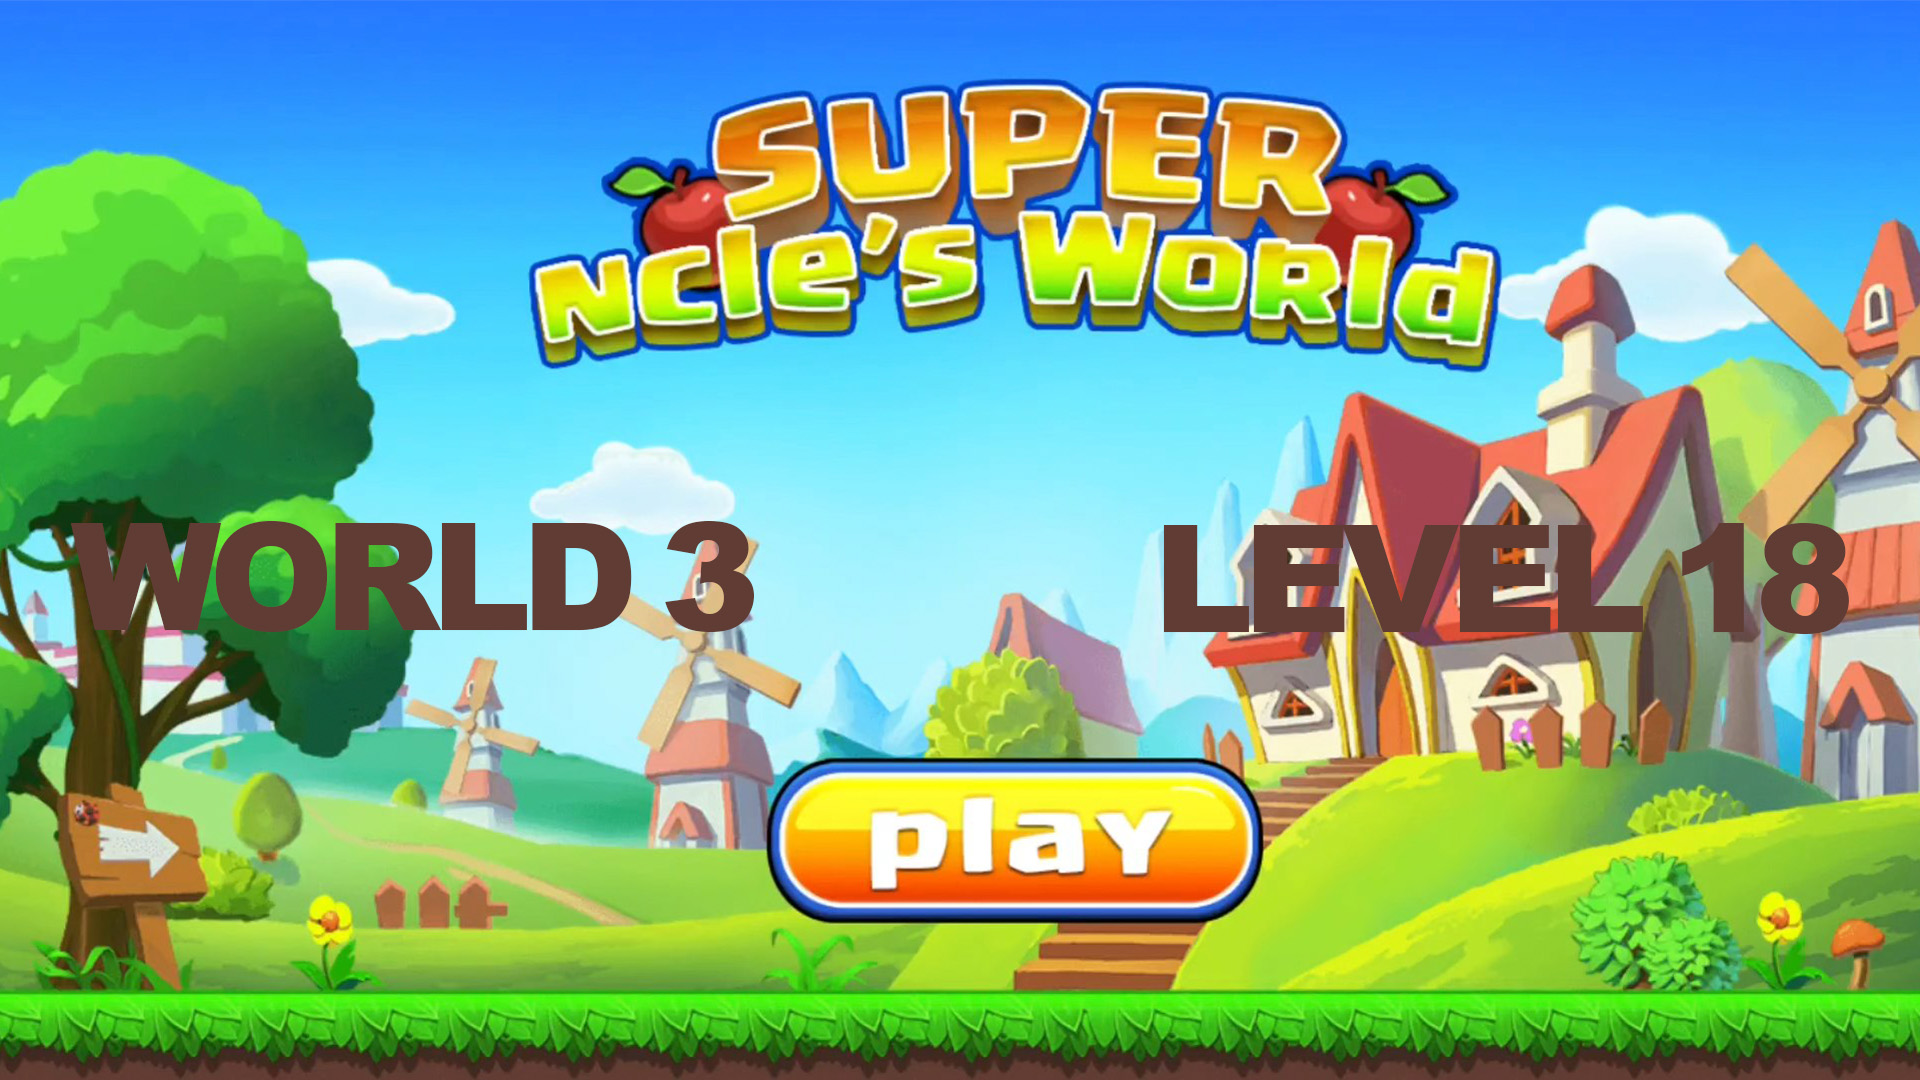 Super ncle's  World 3. Level 18.